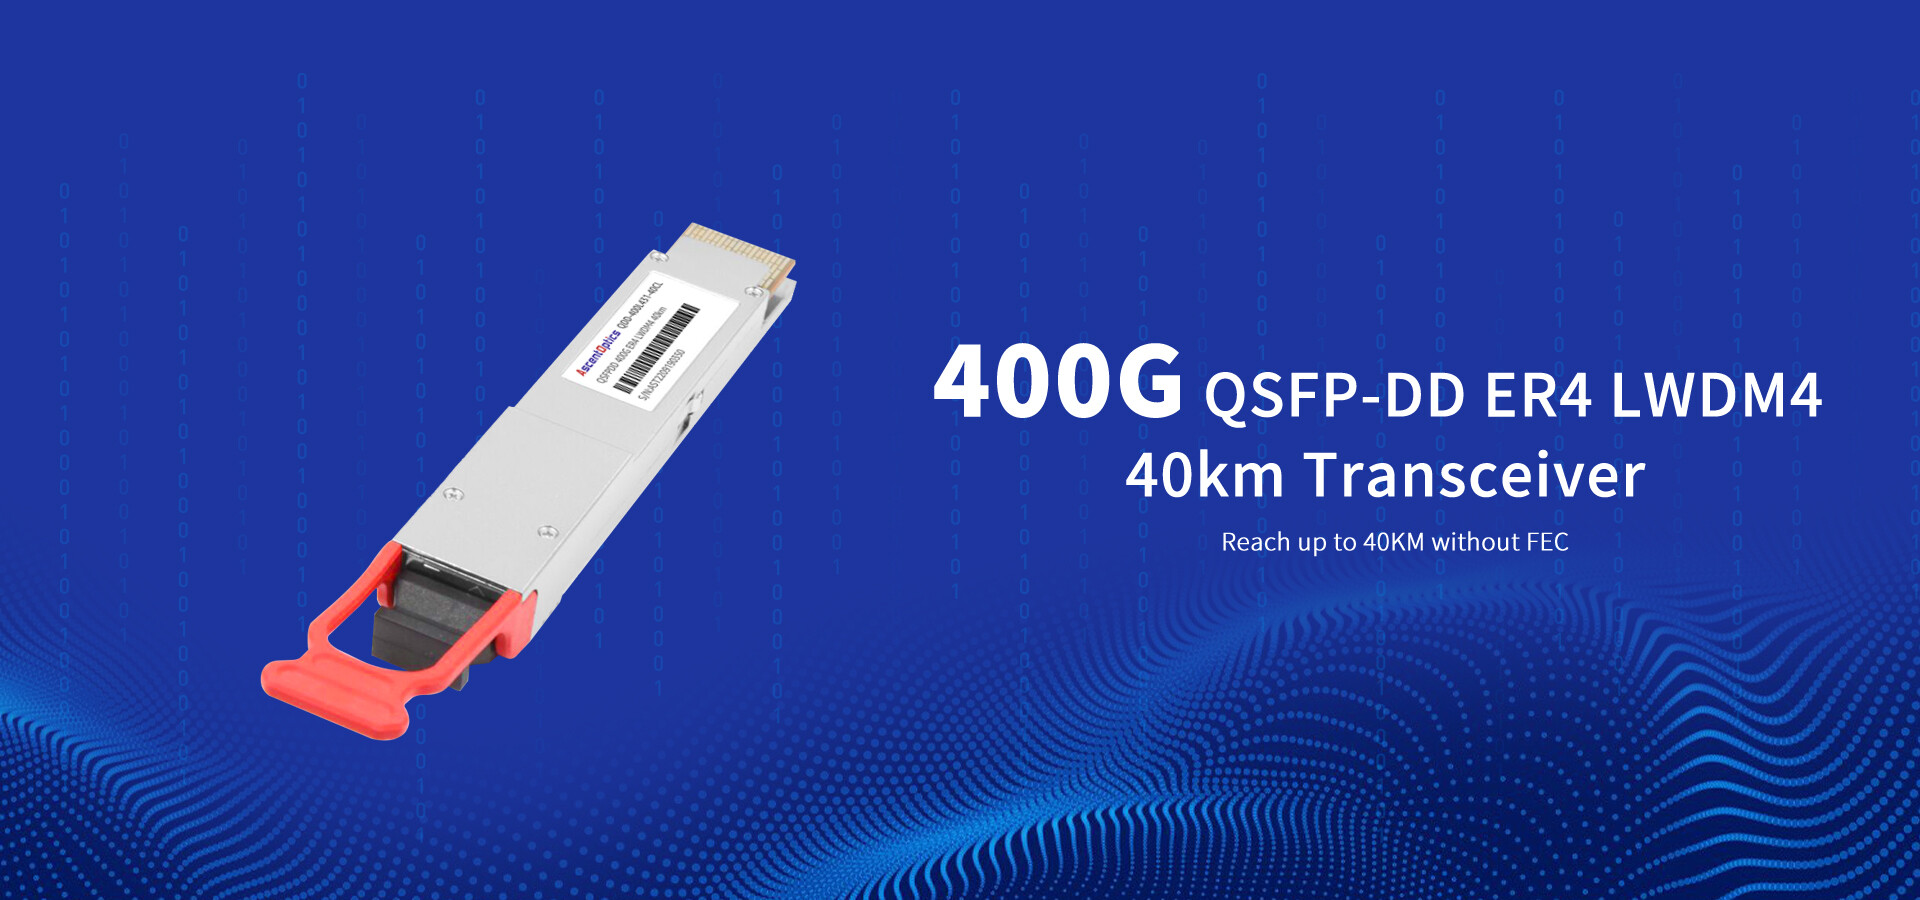 400G QSFP-DD ER4 LWDM4 Transceiver